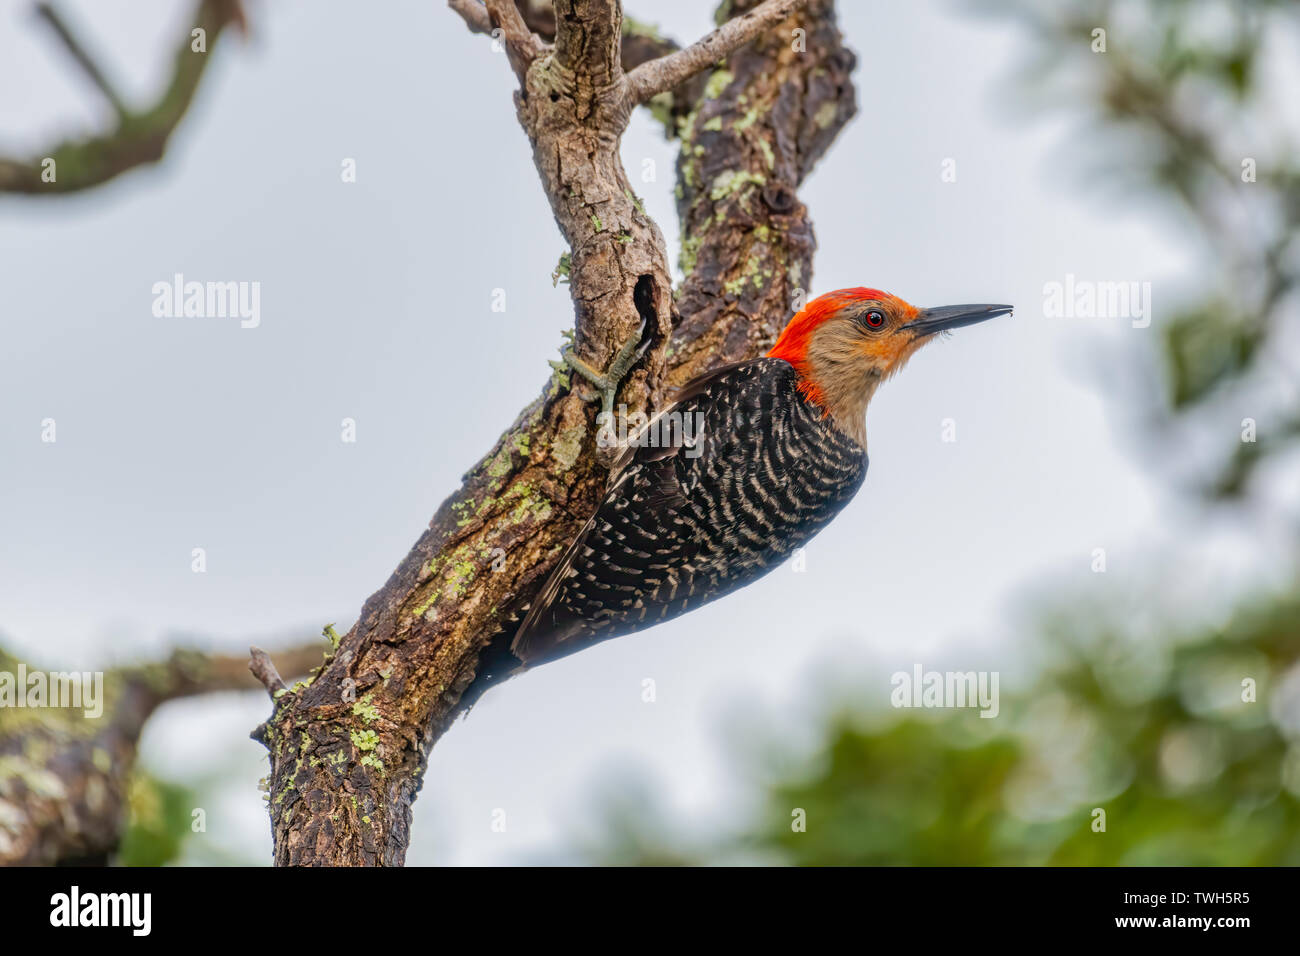 Red bellied woodpecker clinging to scrub oak tree Stock Photo